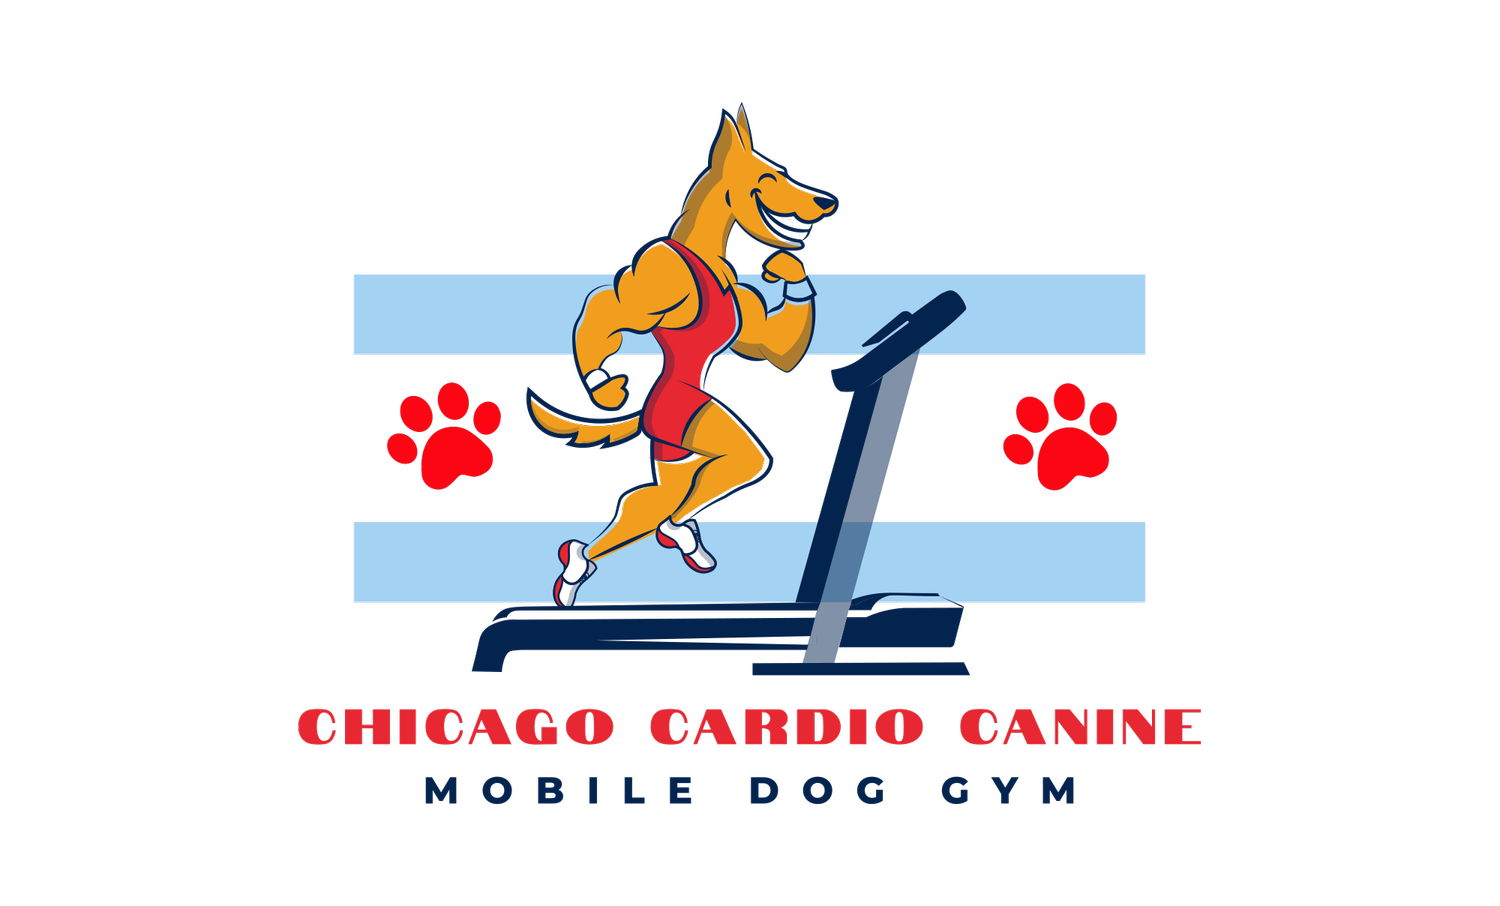 Chicago Cardio Canine